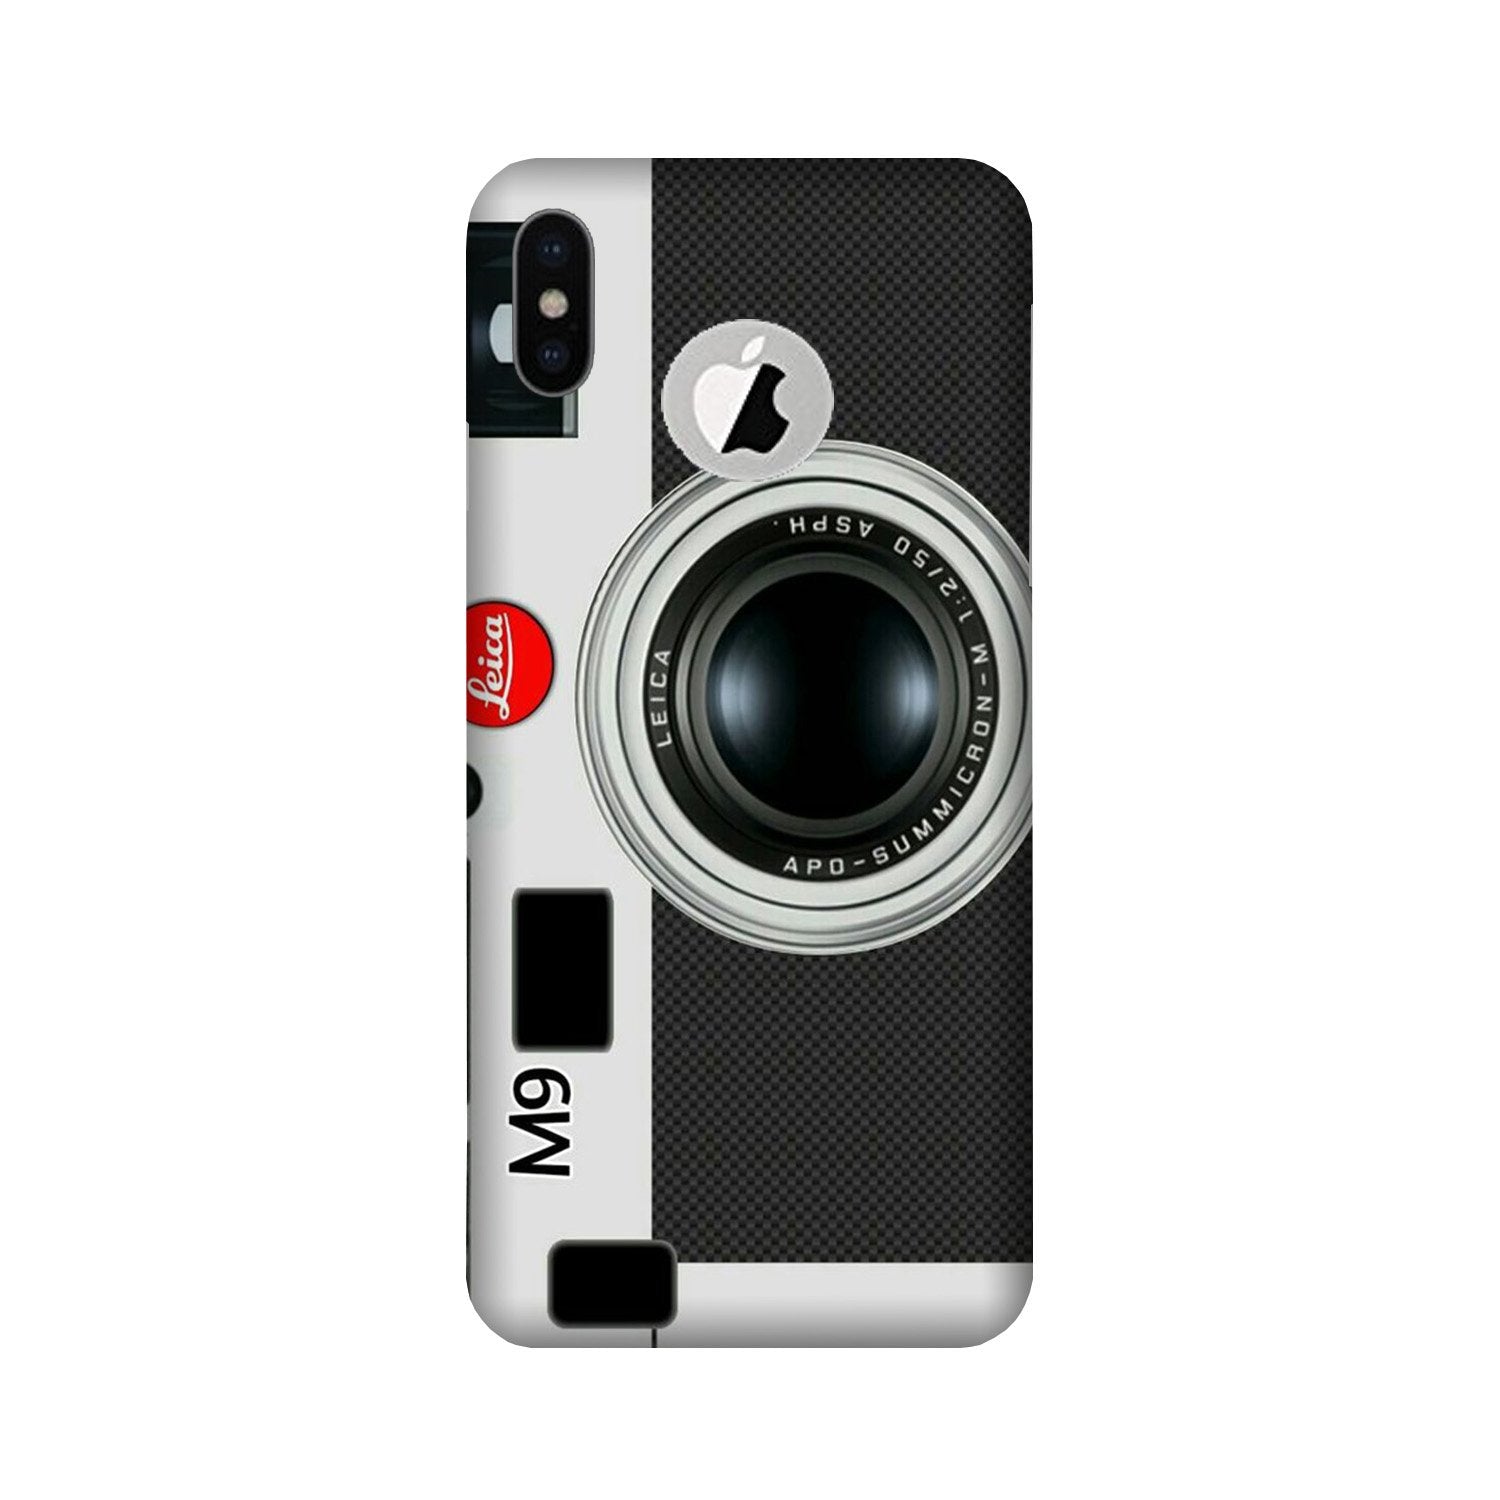 Camera Case for iPhone X logo cut (Design No. 257)